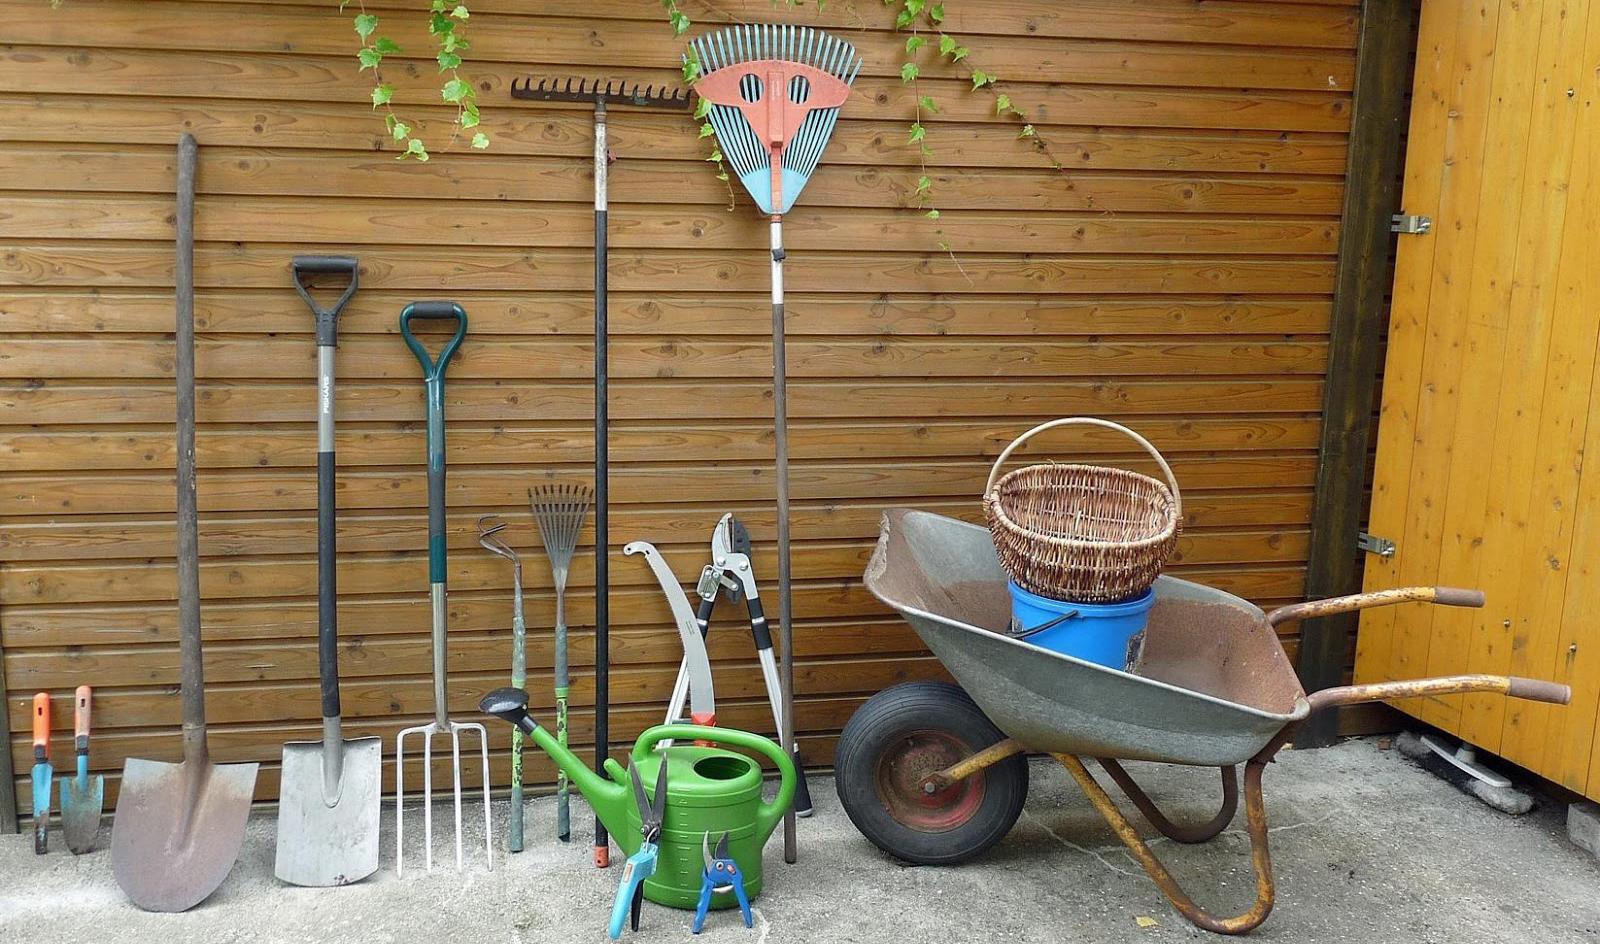 Gardening tools and equipment Photo: Das Ant